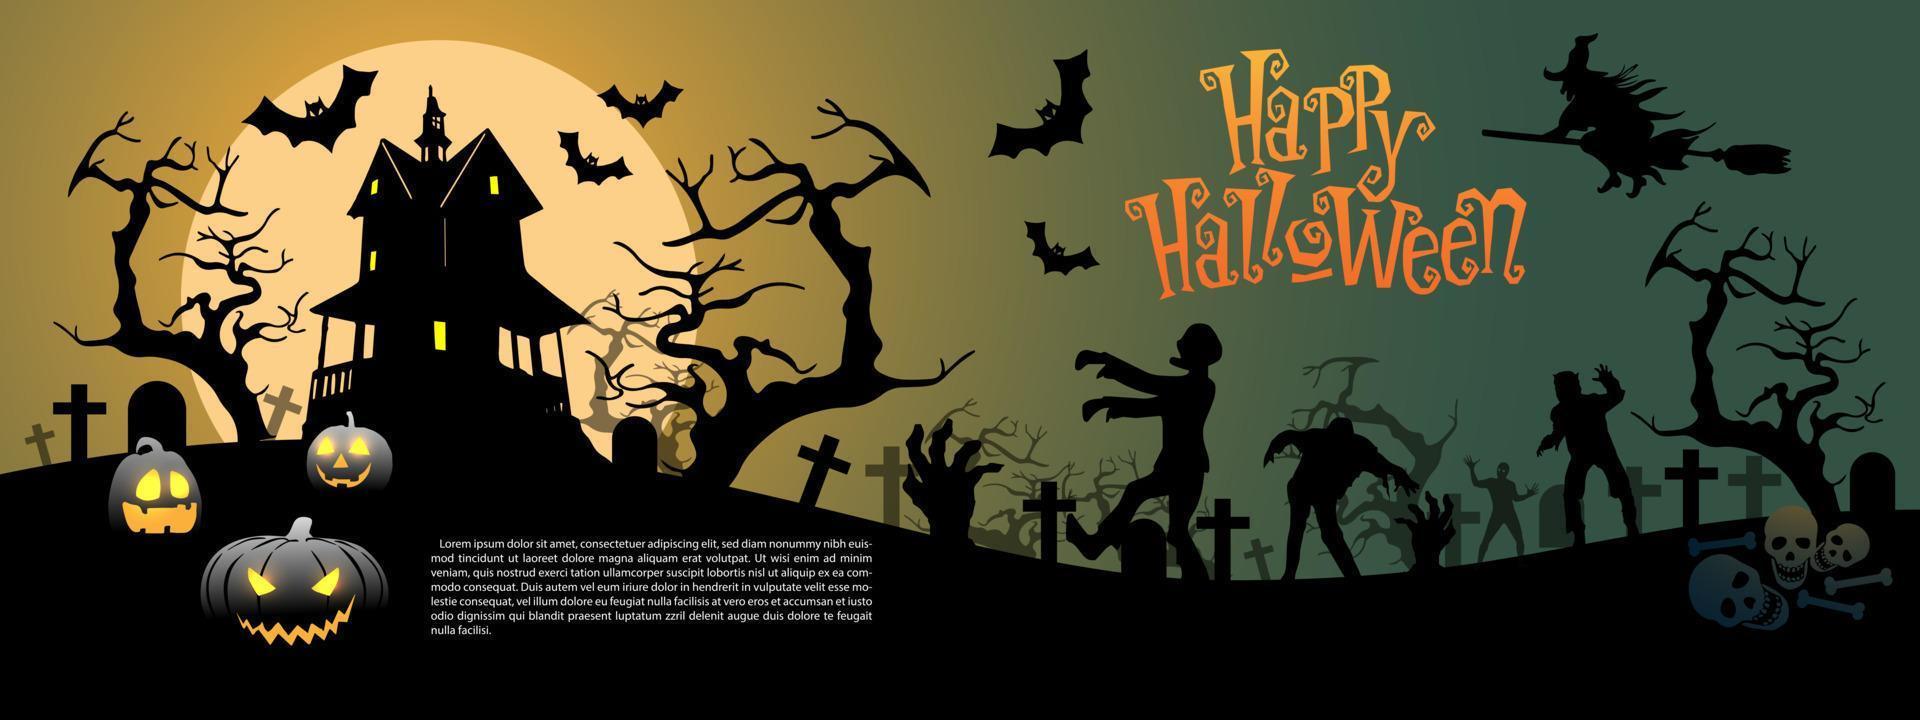 Happy Halloween night party holiday festival celebration black on orange green design vector